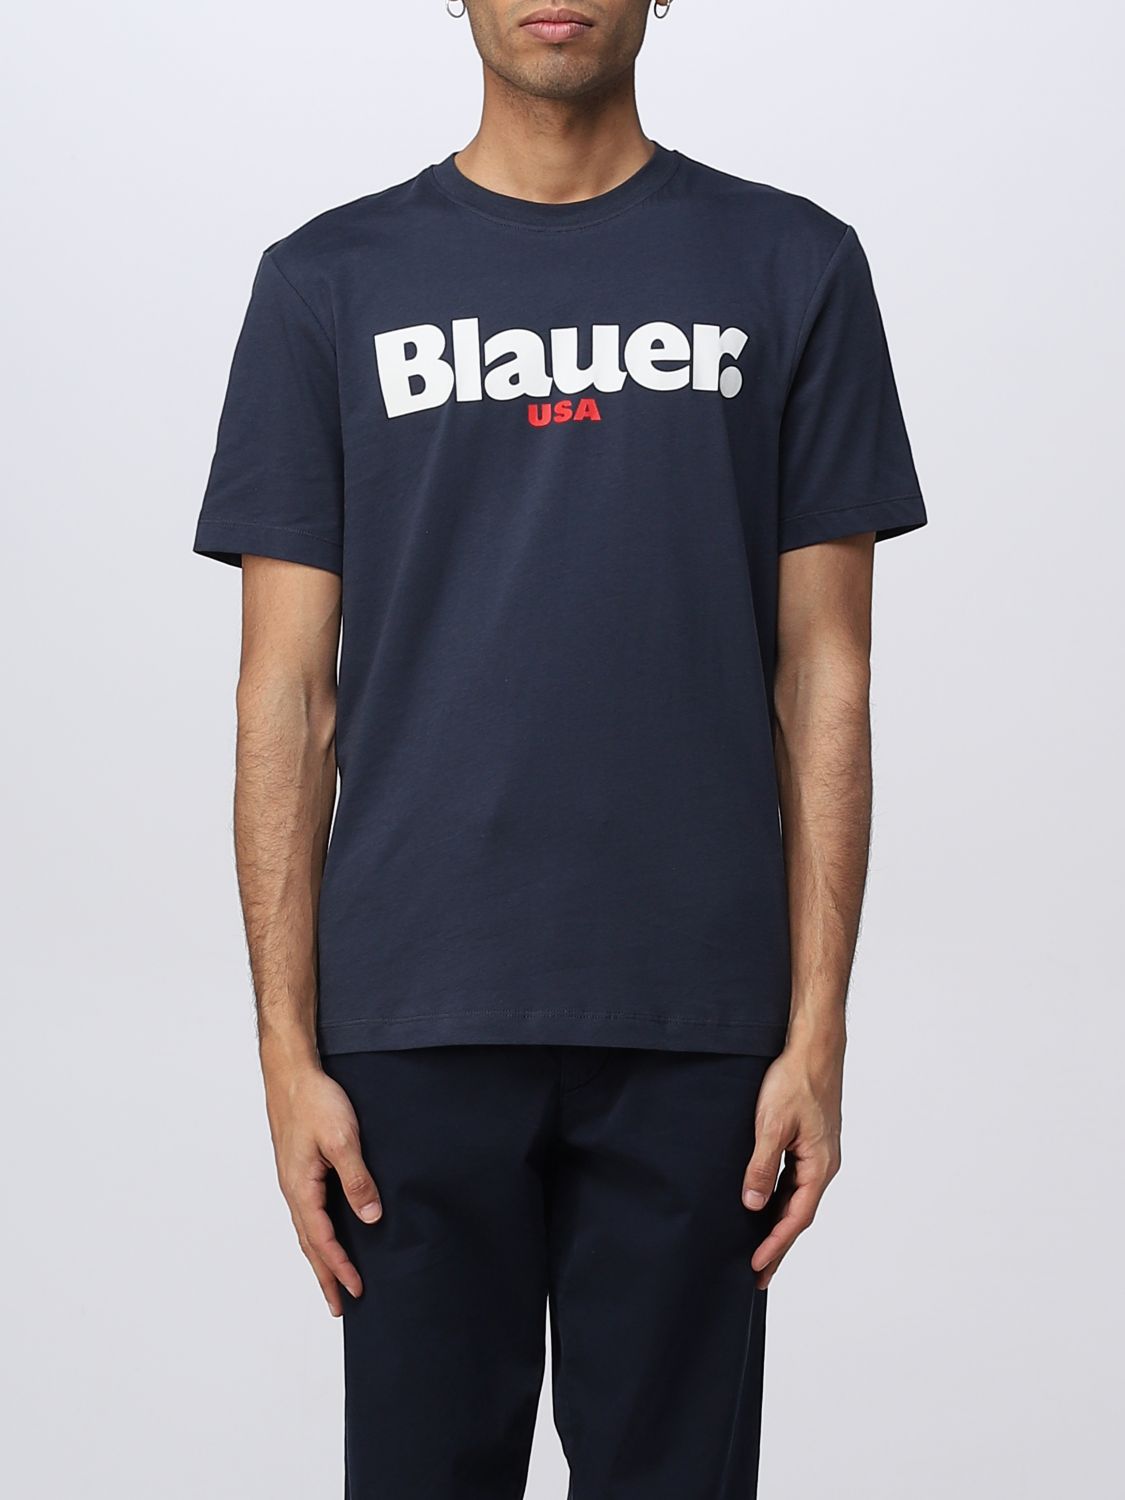 BLAUER T-SHIRT BLAUER MEN colour BLUE,379166009